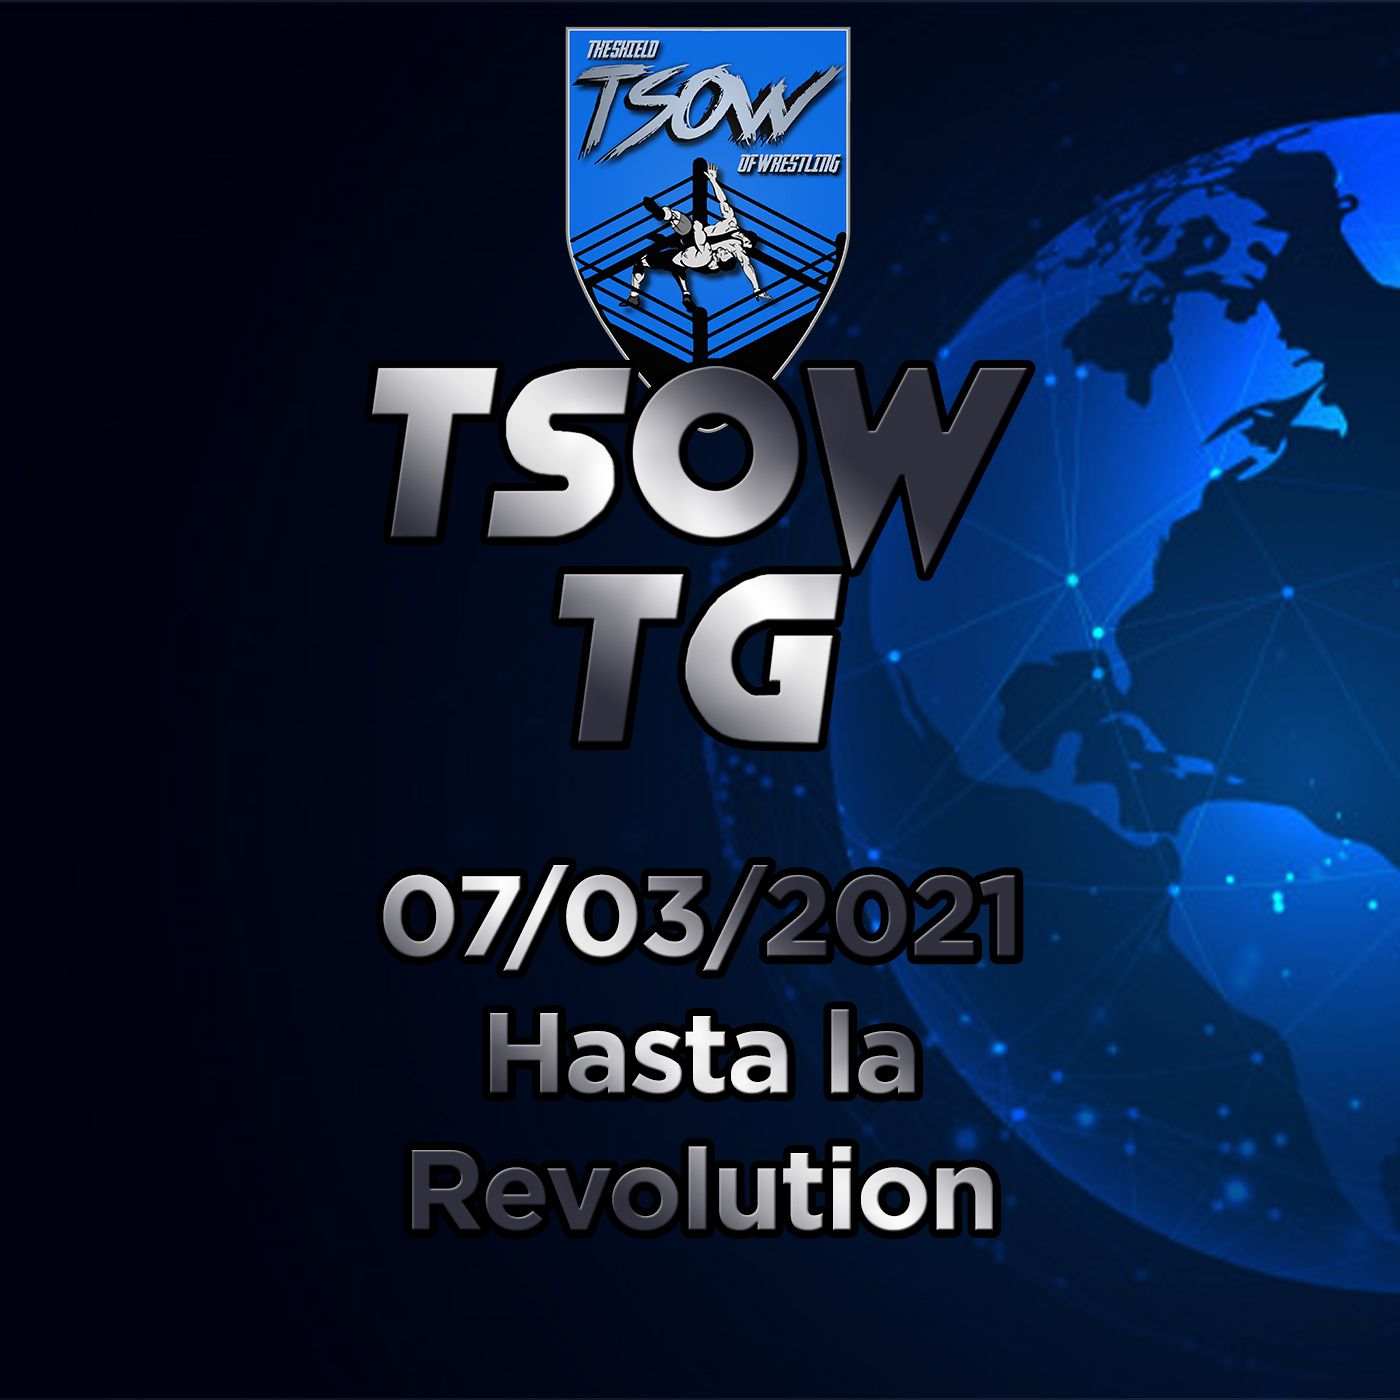 TSOW TG 08/03/2021 - Hasta la Revolution!